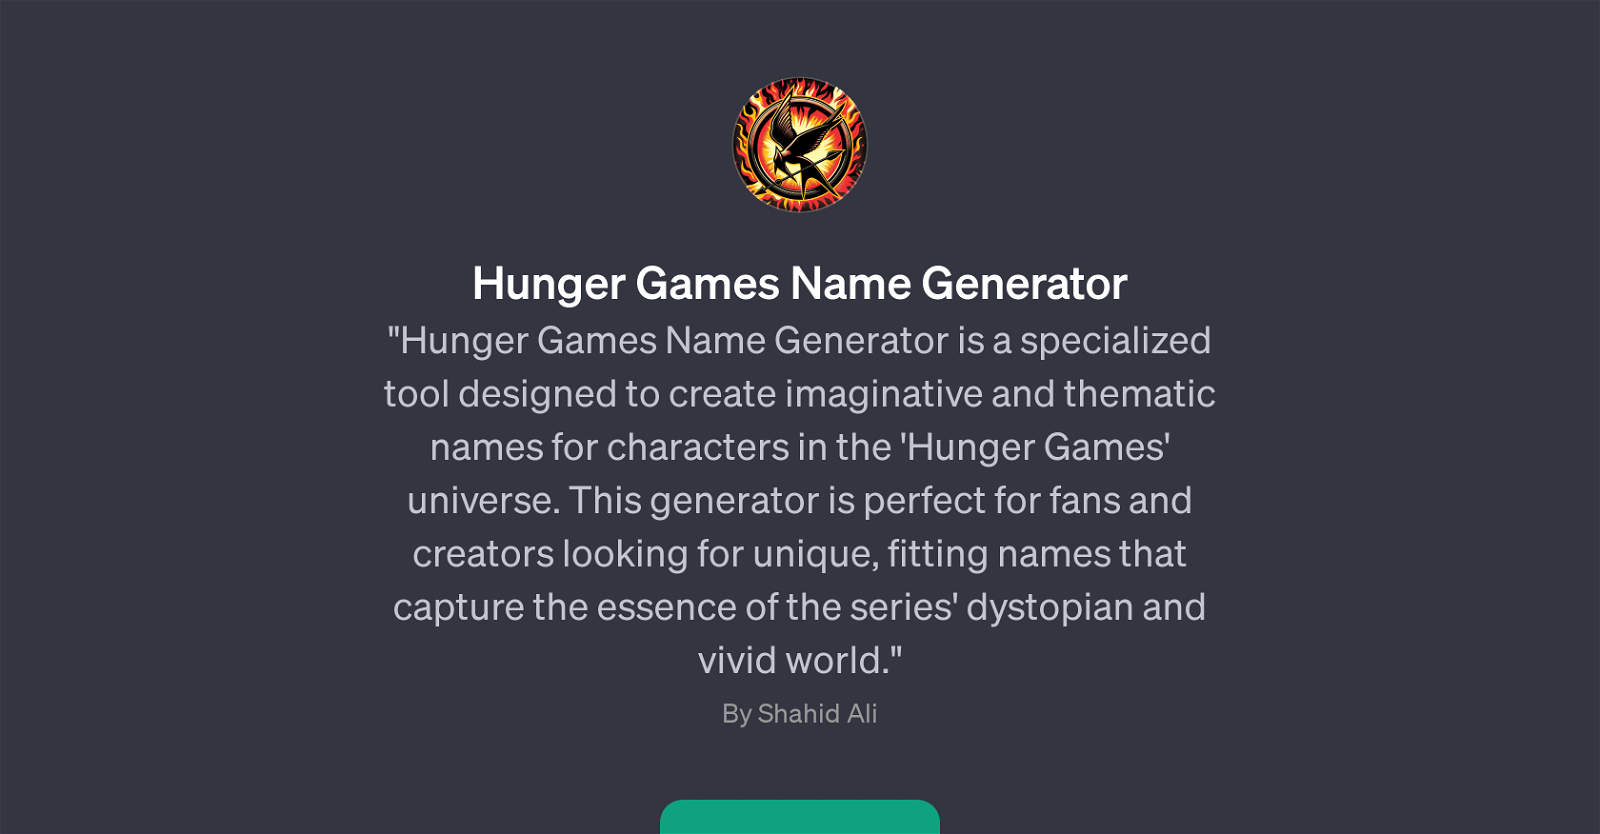 Hunger Games Name Generator website